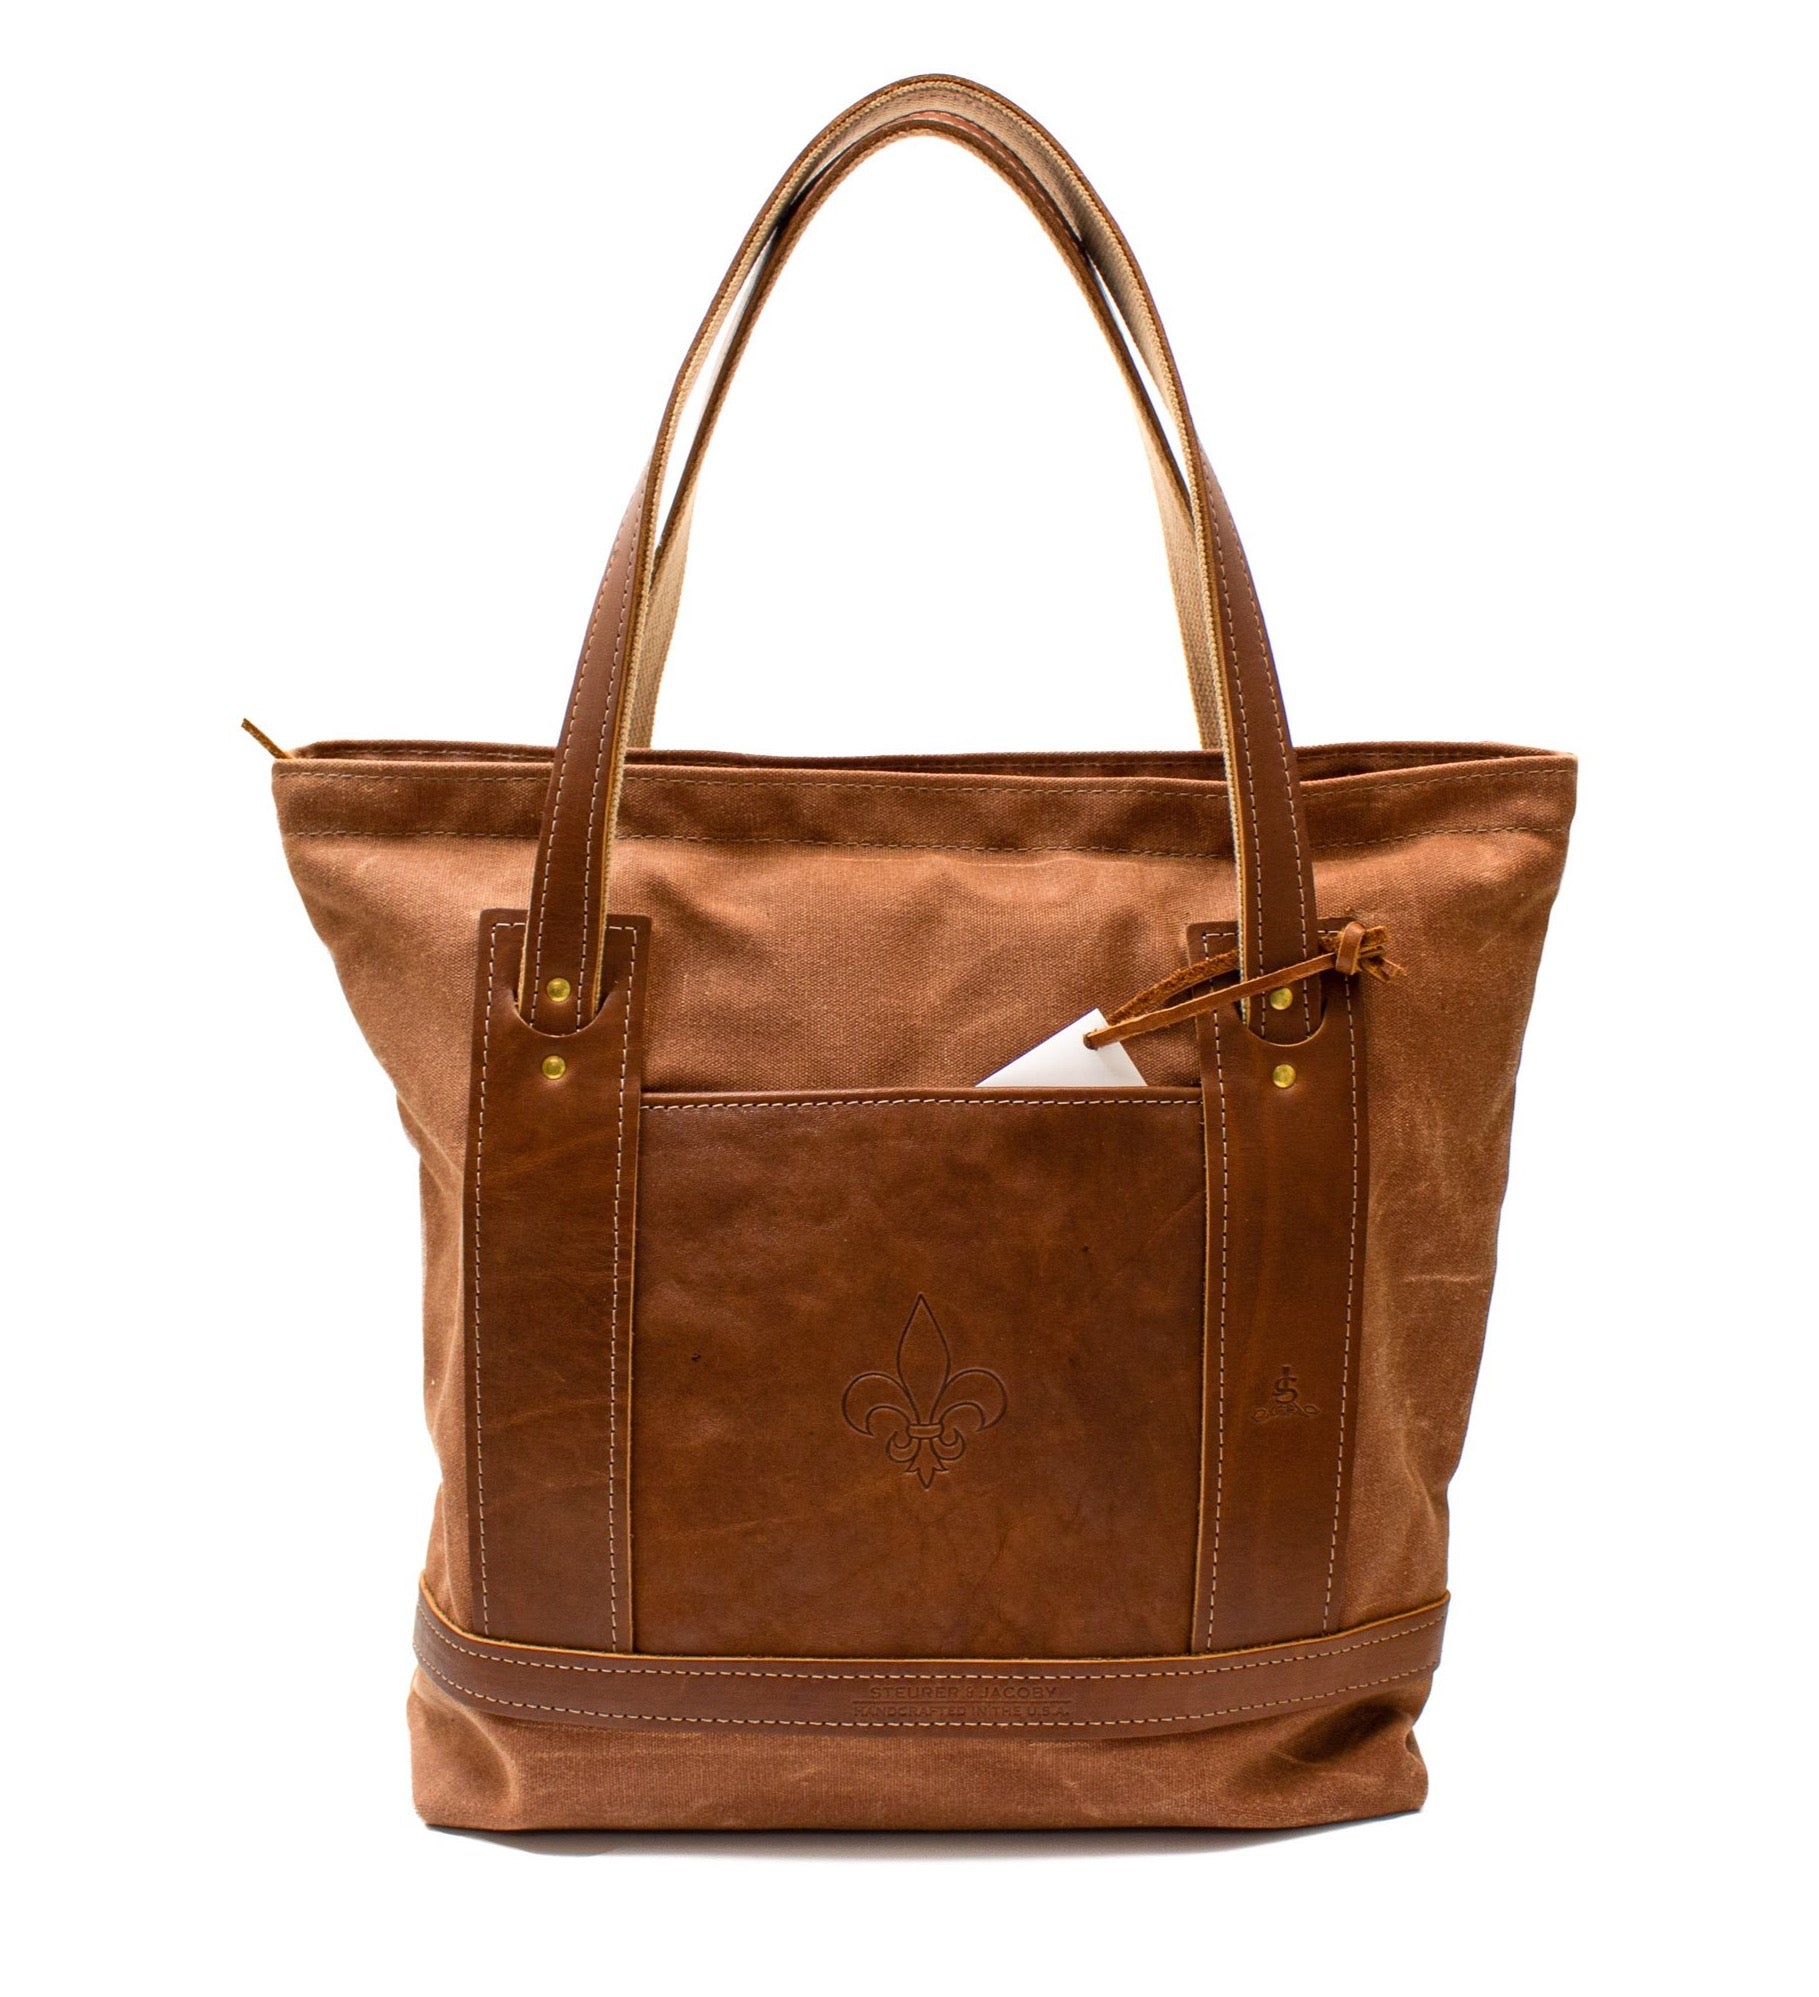 Market Bag- Brush Brown and Chestnut Leather- Steurer & Jacoby